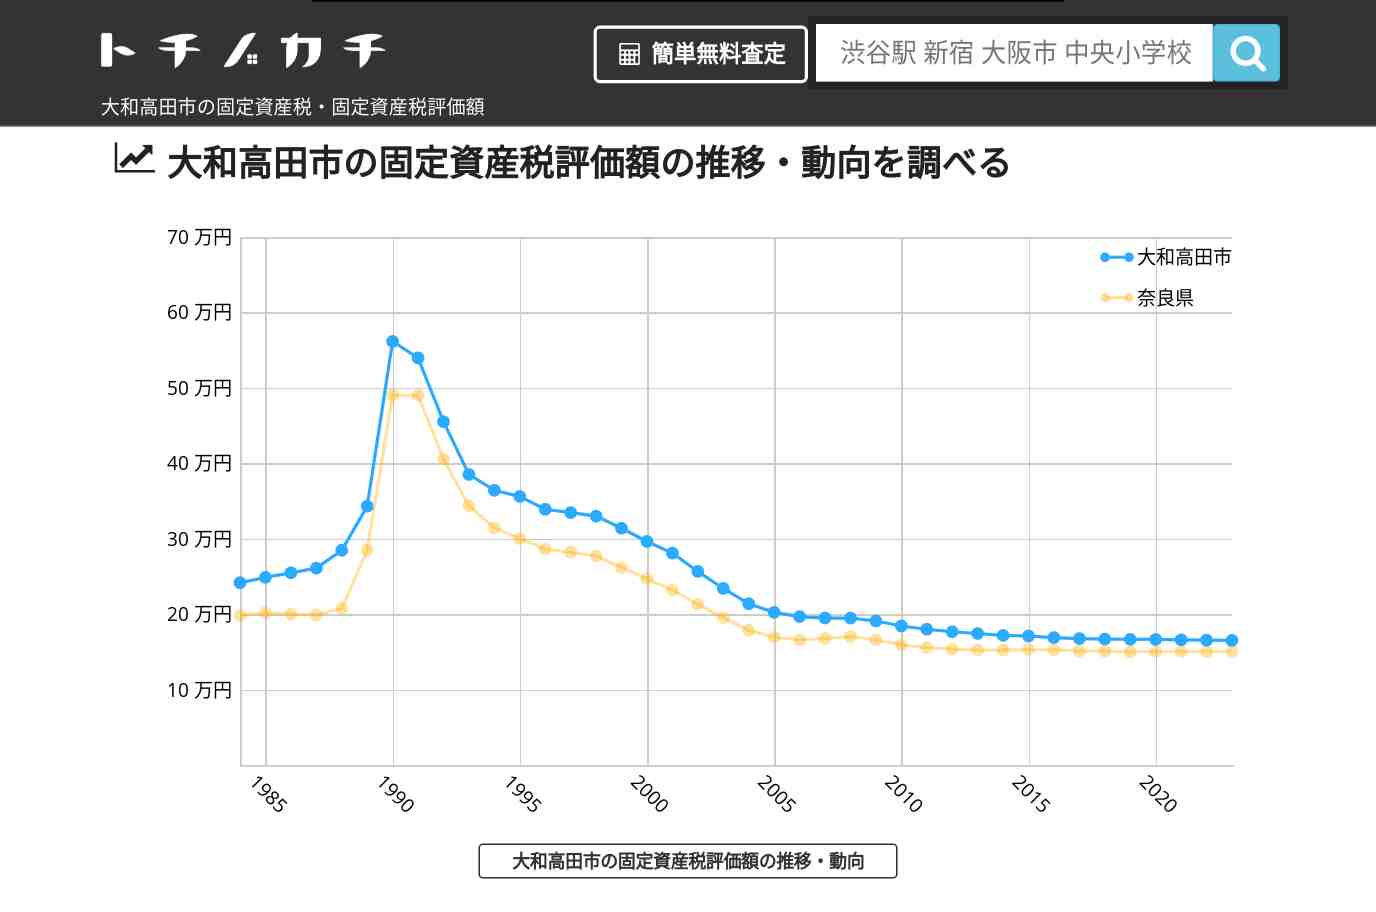 片塩中学校(奈良県 大和高田市)周辺の固定資産税・固定資産税評価額 | トチノカチ